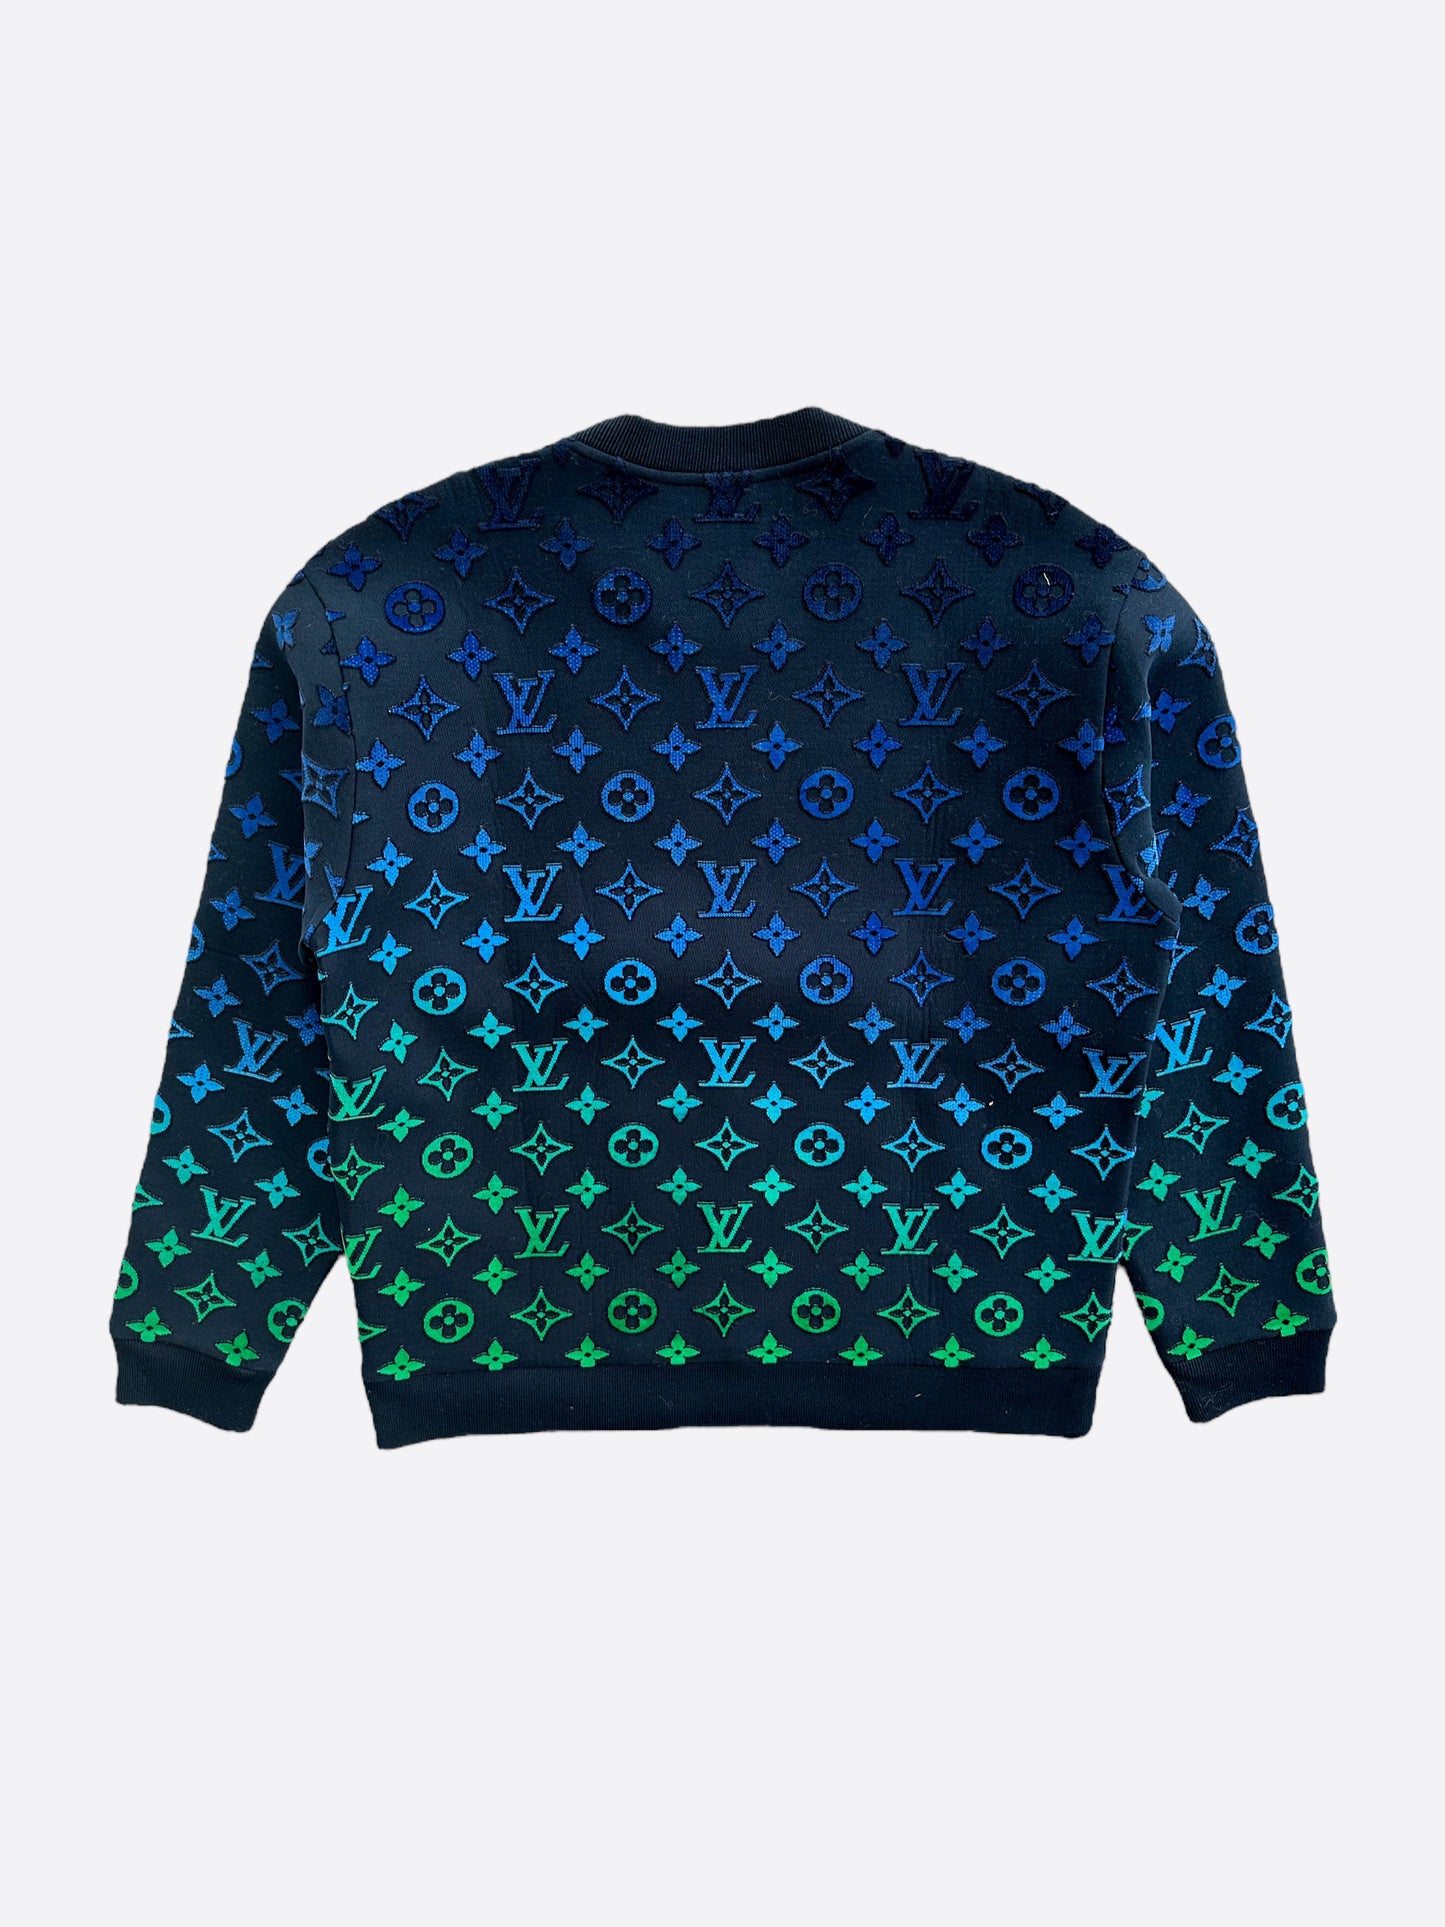 lv green sweater